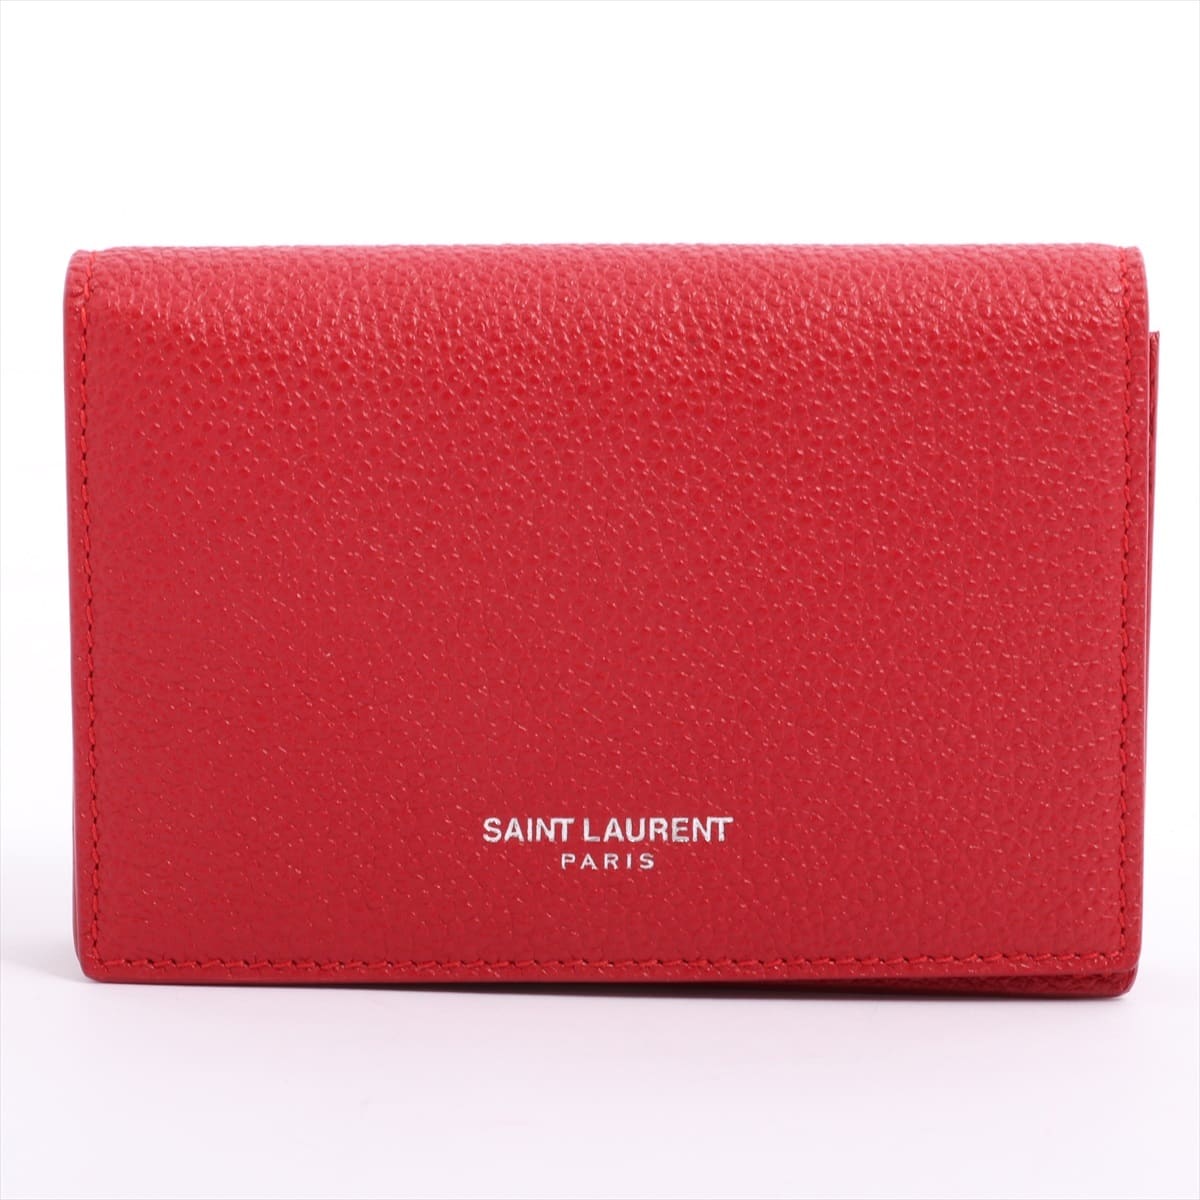 Saint Laurent Paris model number unknown Leather Card case Red GRZ360433 Internal corner thread